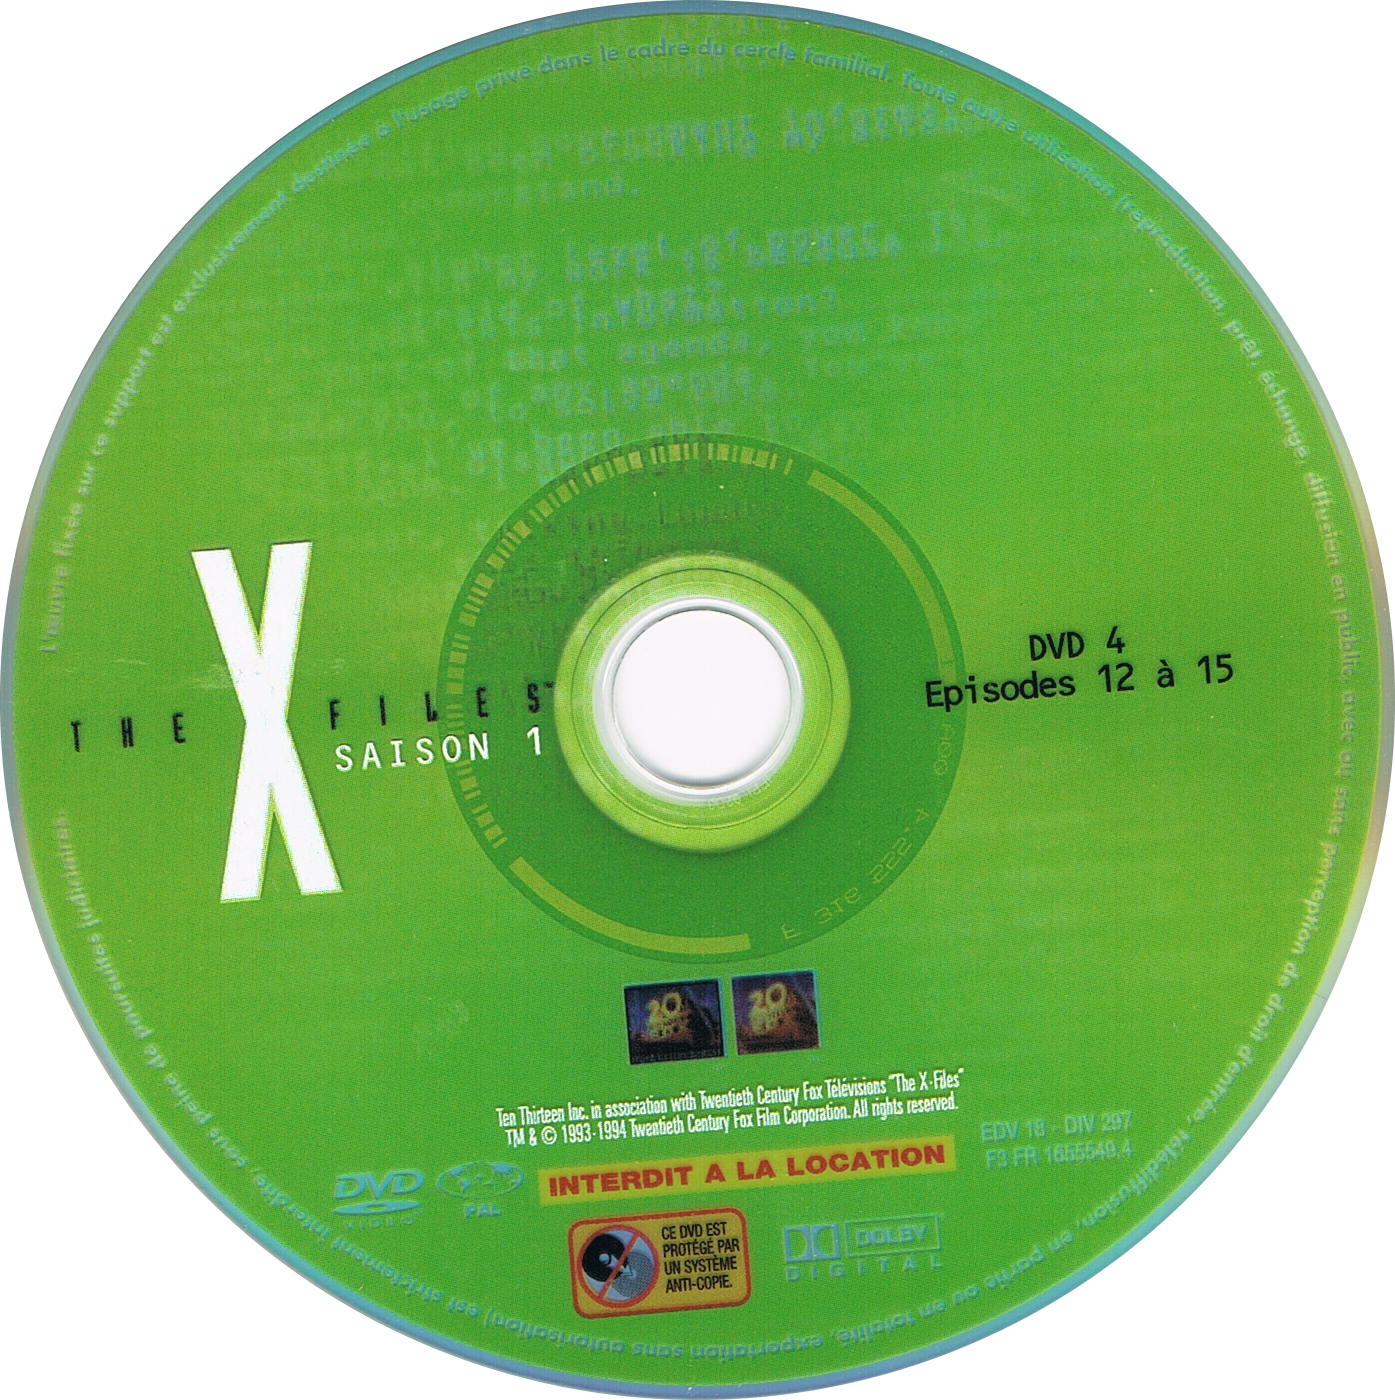 The X Files Saison 1 DVD 4